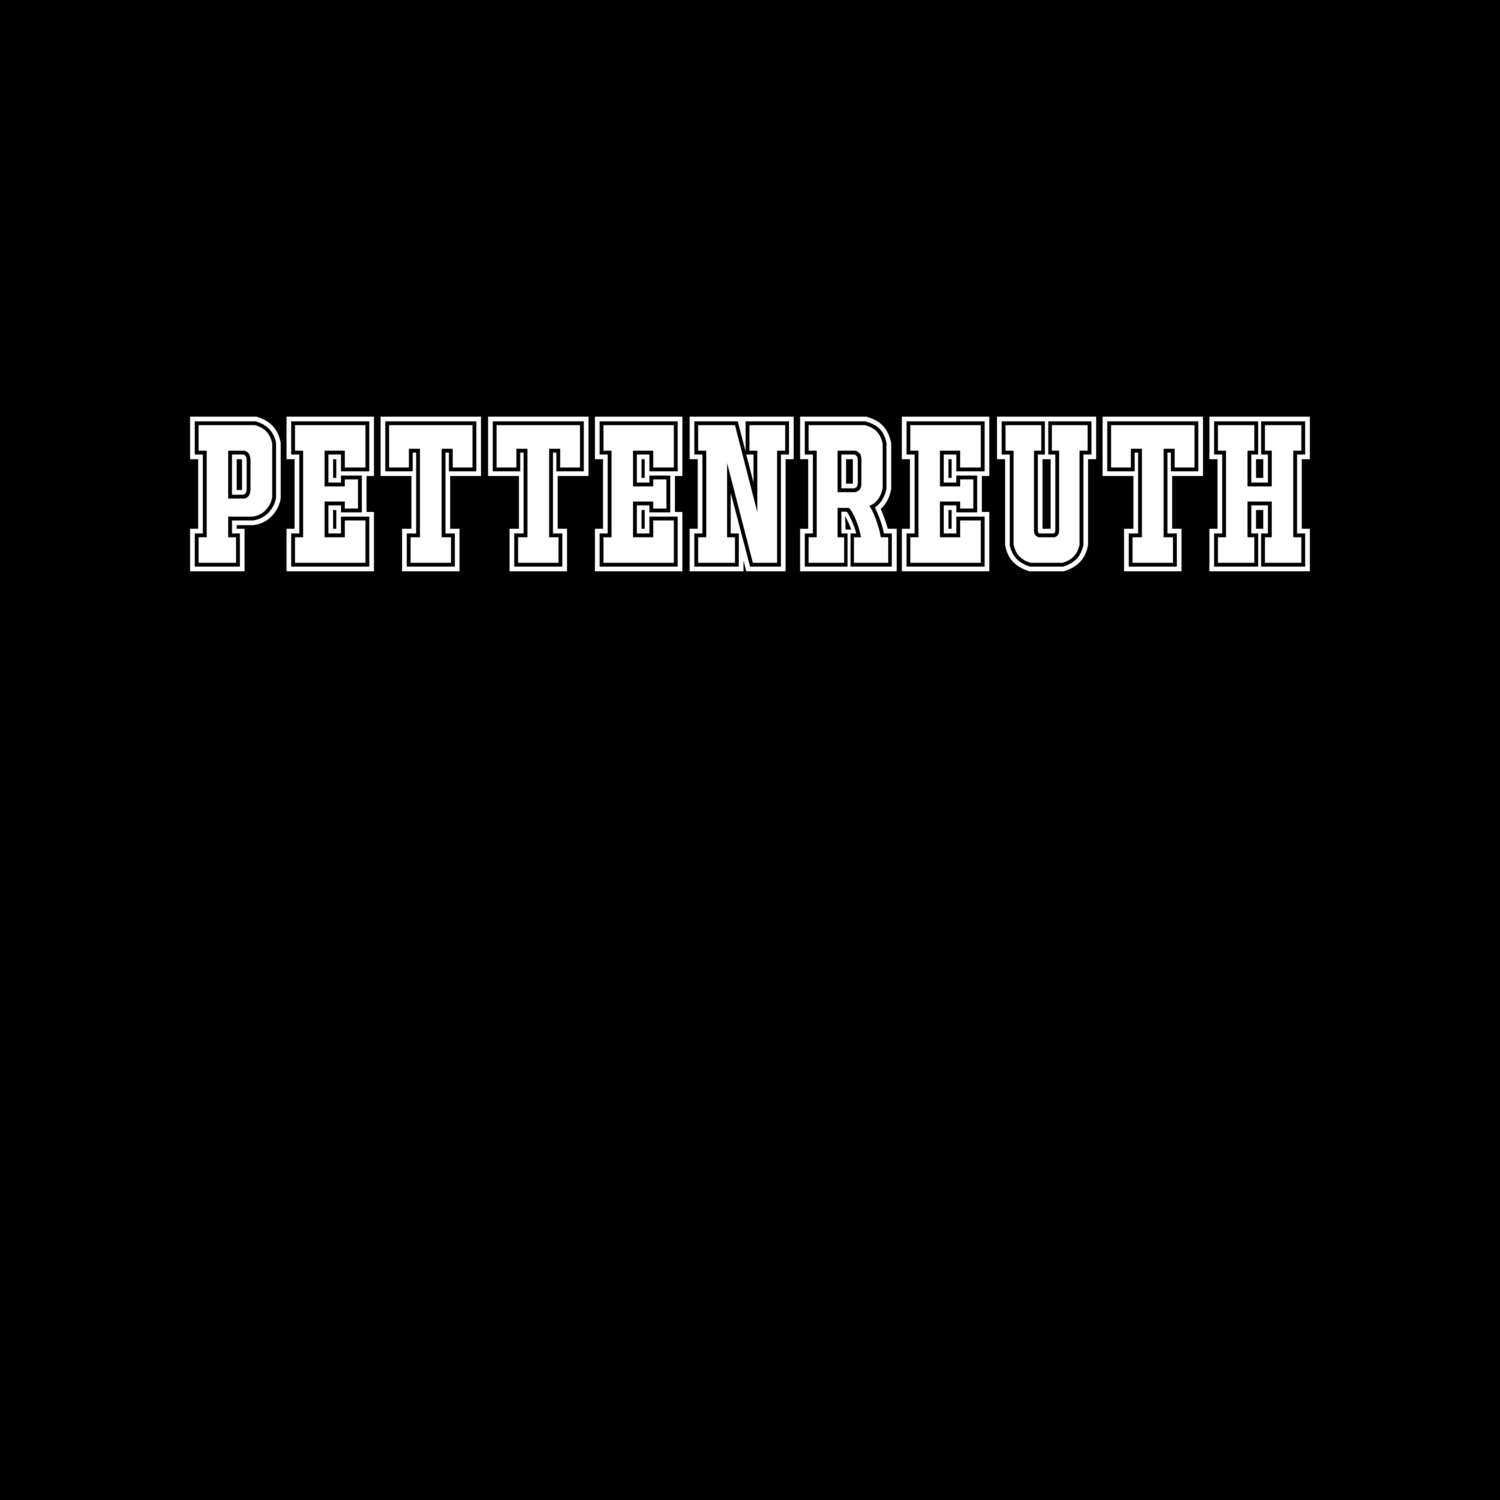 Pettenreuth T-Shirt »Classic«